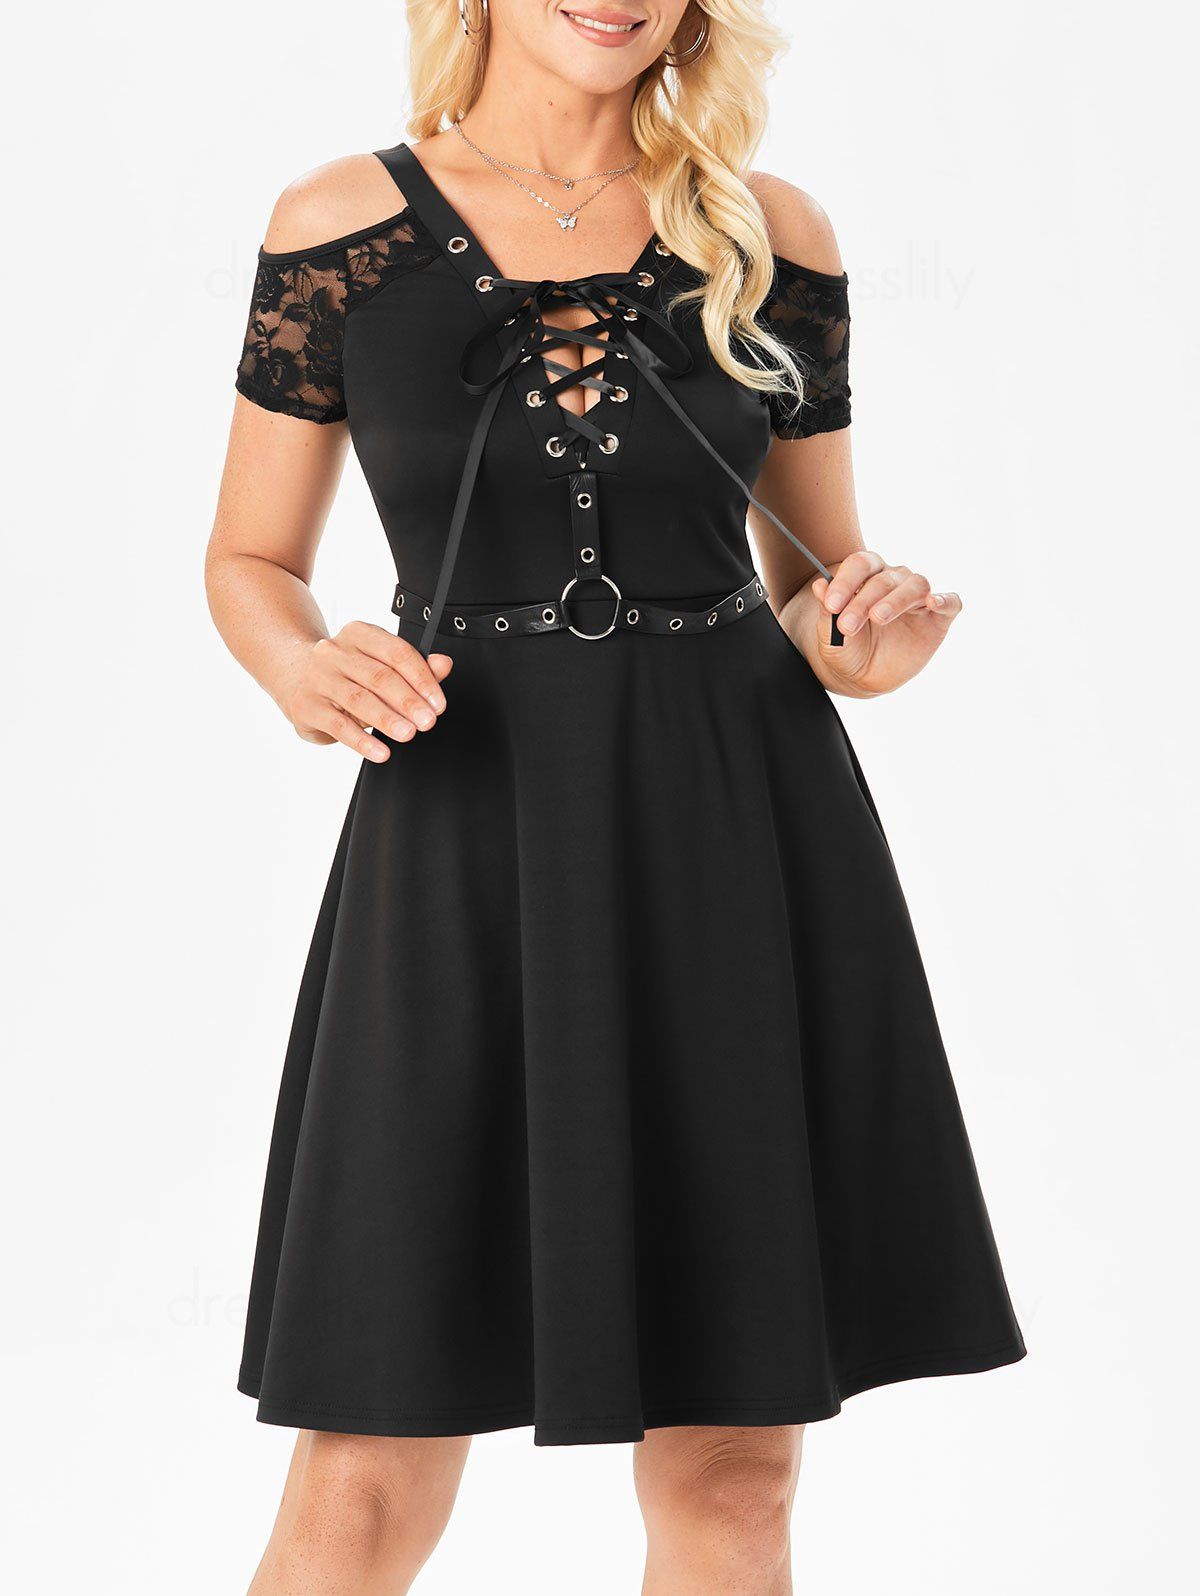 Gothic Dress See Thru Flower Lace Cold Shoulder Dress Lace Up O Ring Belt Cross Back Mini Dress - BLACK M